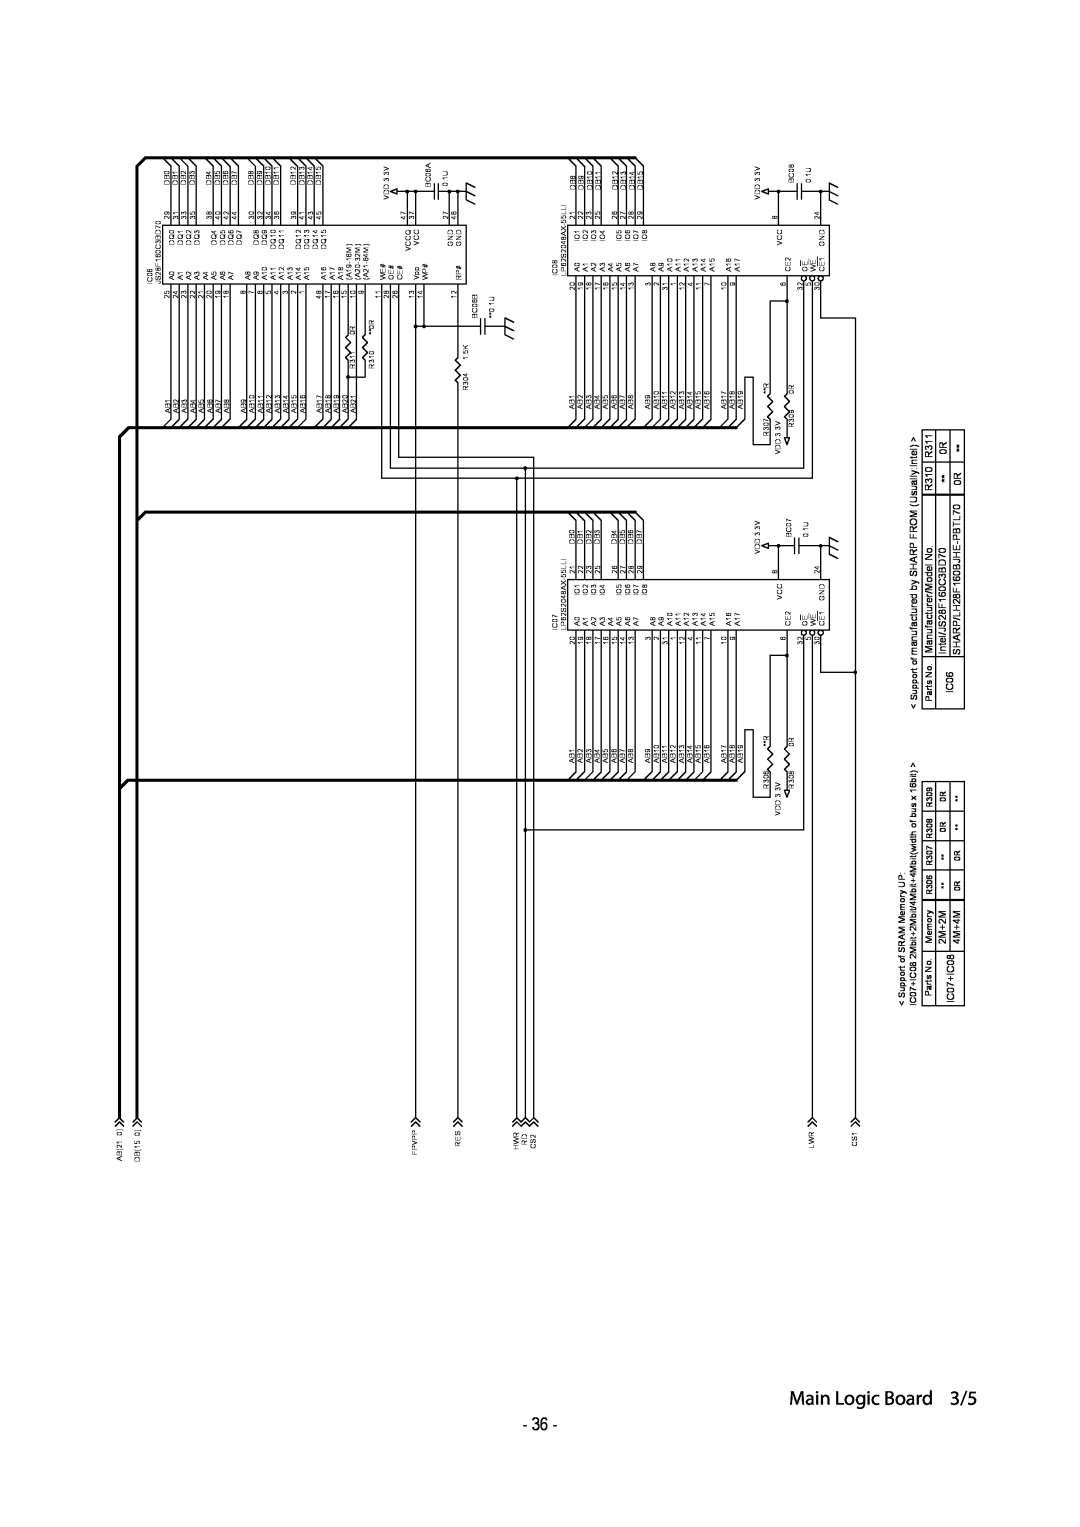 Star Micronics TUP500 technical manual Main Logic Board 3/5 